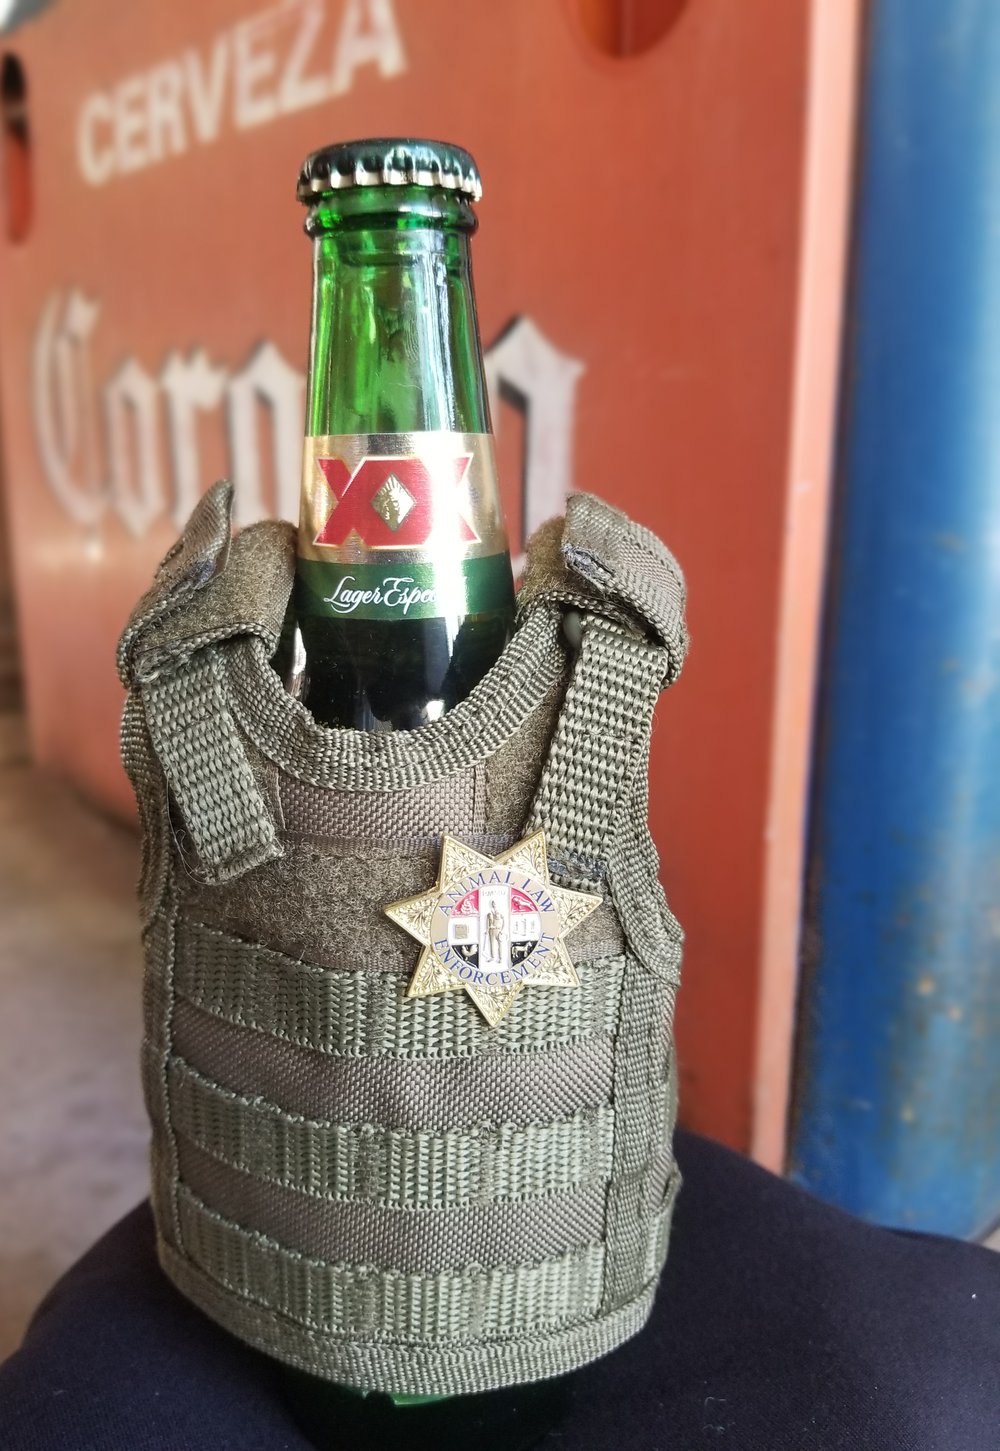 Beer and Soda tactical koozie